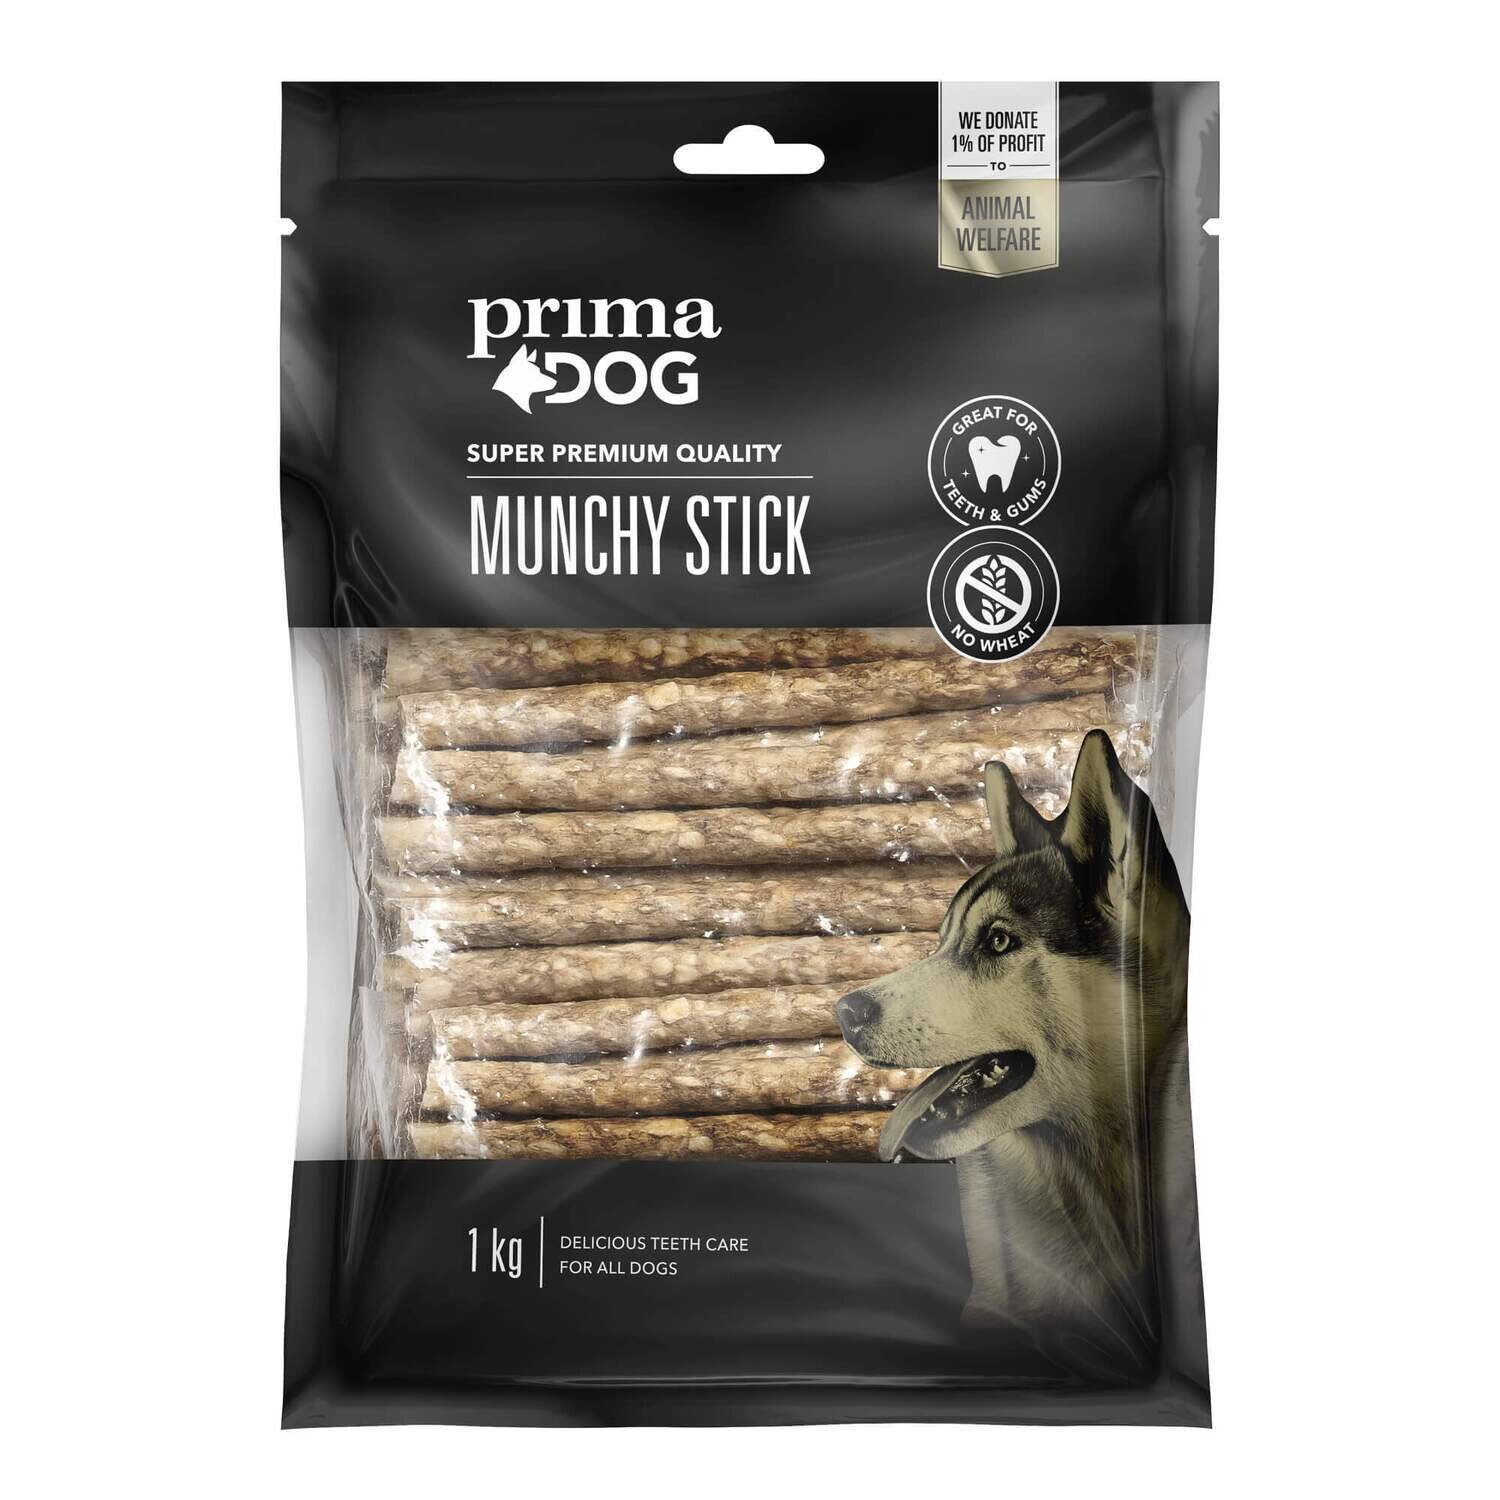 Primadog munchy stick - 1 kg